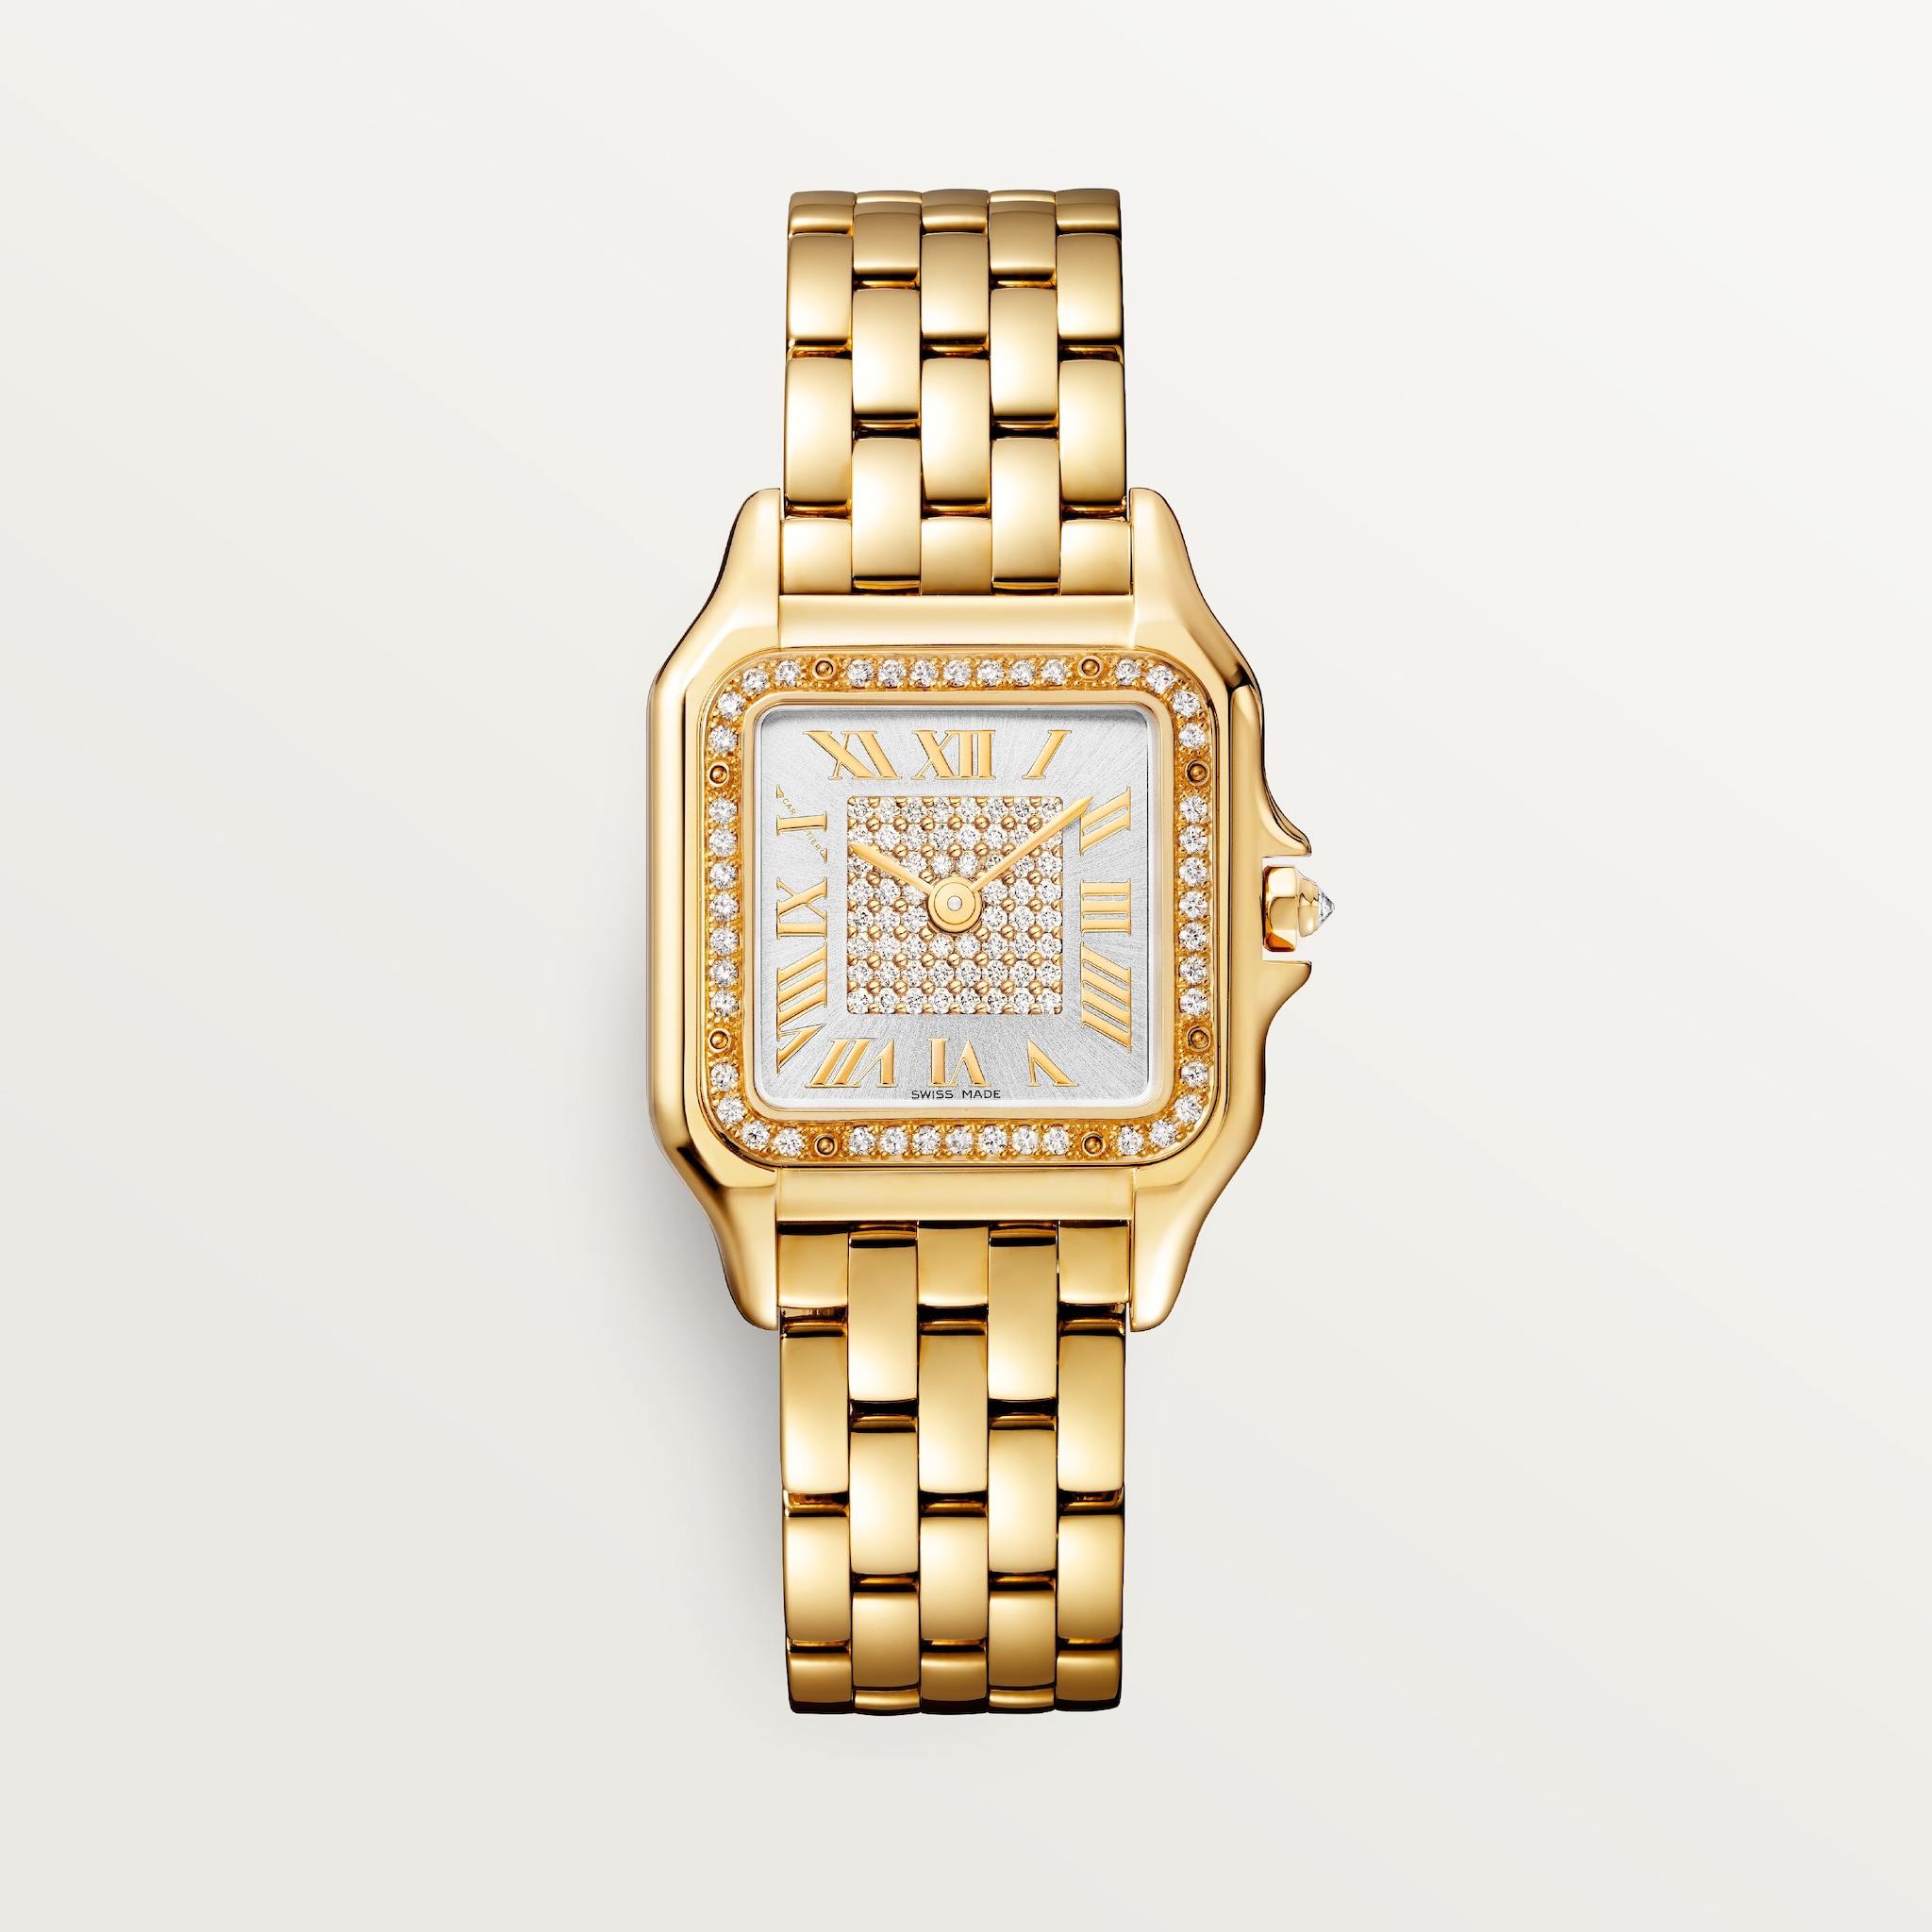 Reloj Panthère de CartierTamaño mediano, cuarzo, oro amarillo, diamantes